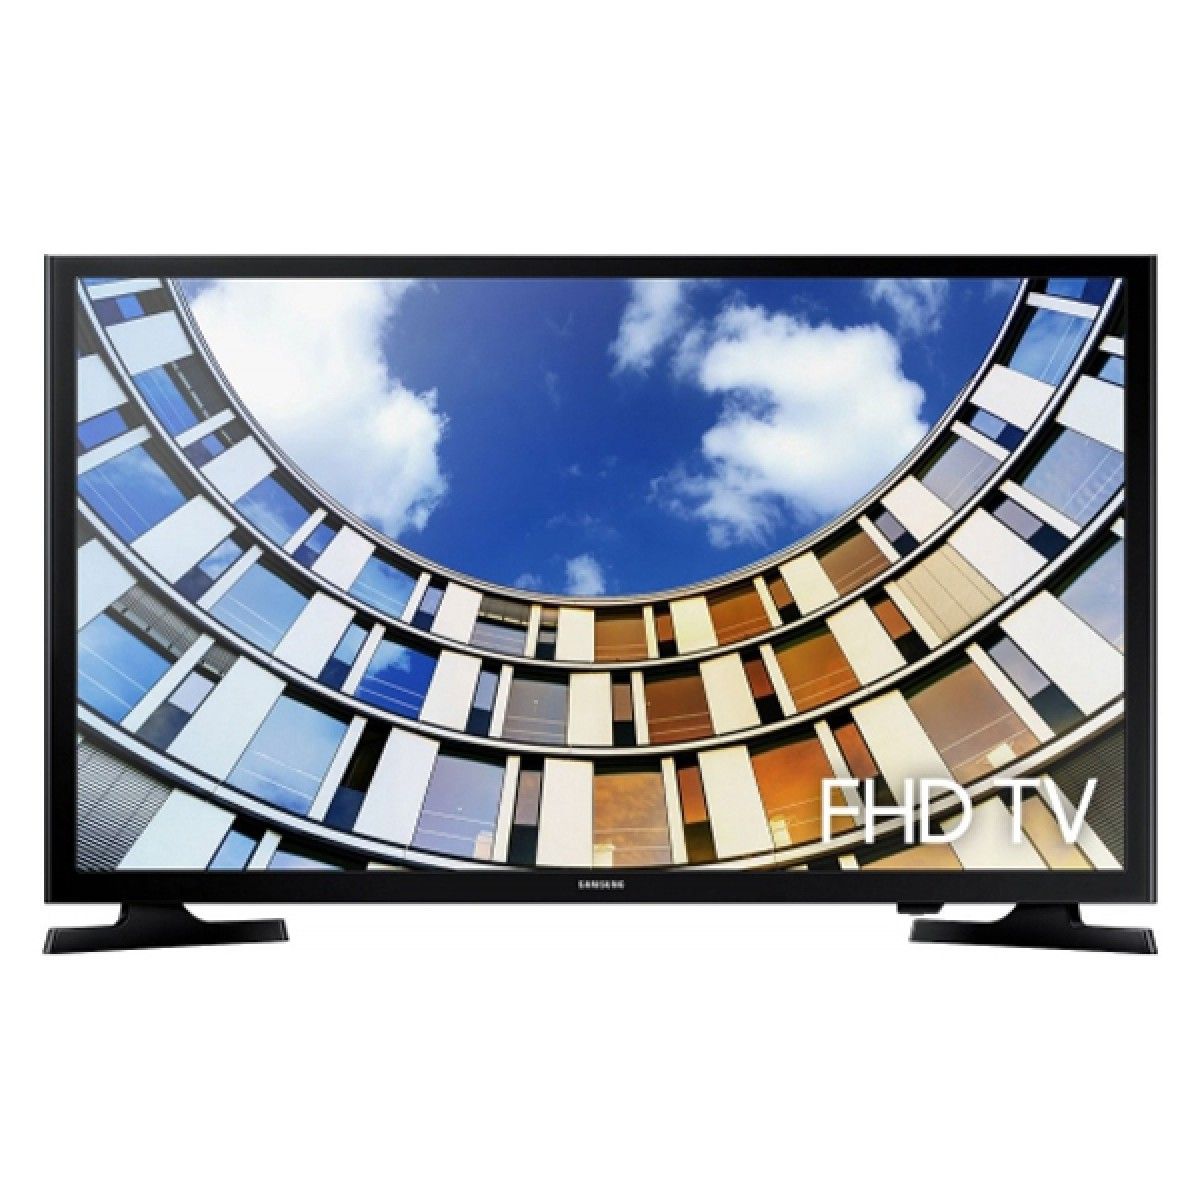 Samsung 49" Full HD LED TV (49M5000)